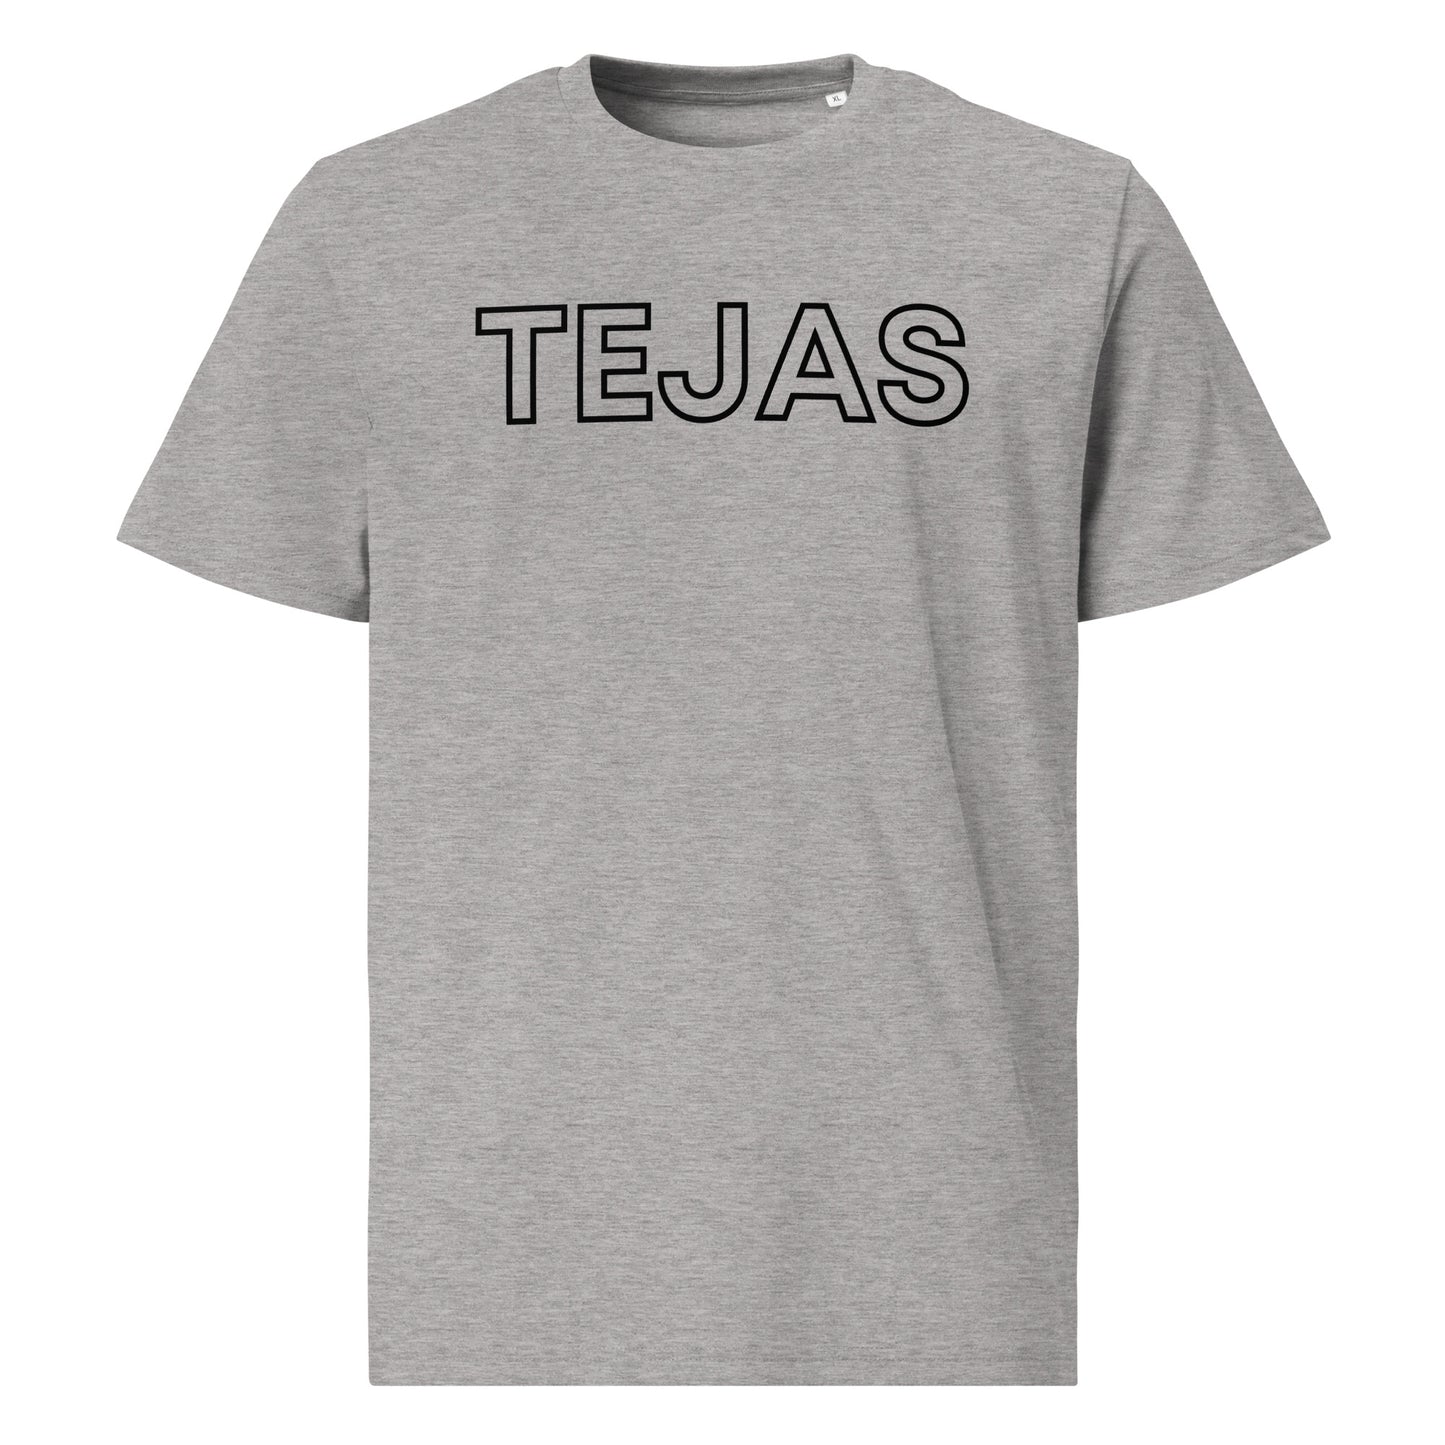 Tejas - Unisex organic cotton t-shirt